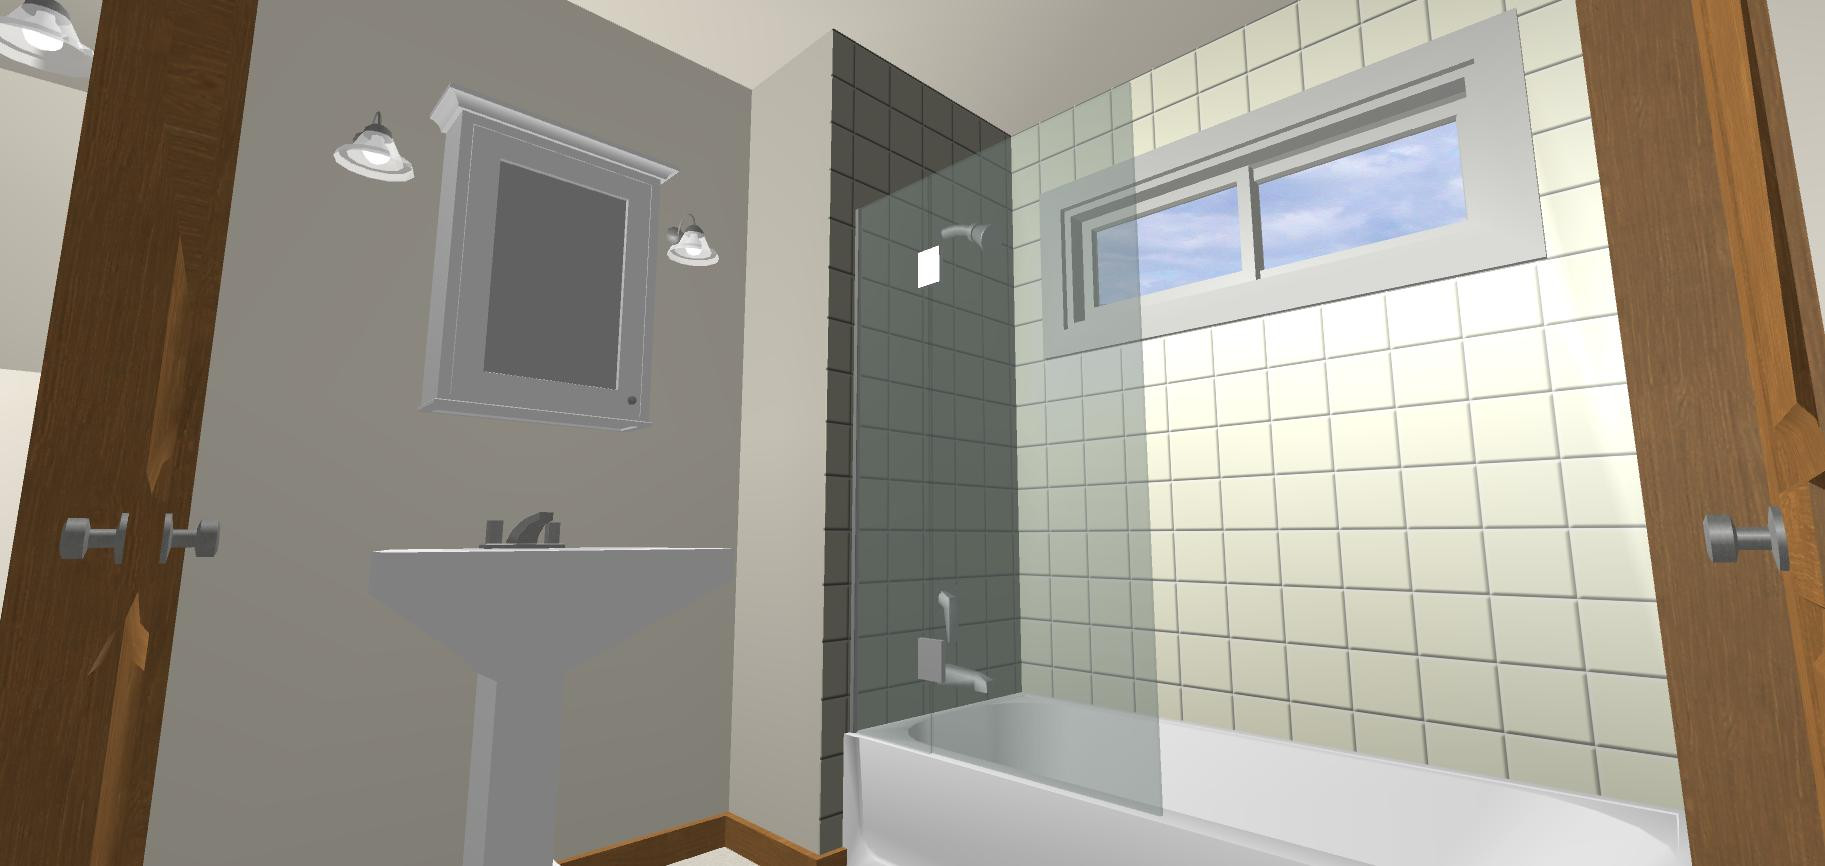 Bathroom Shower Windows
 Window For Tub shower Wall Re mend Product Windows